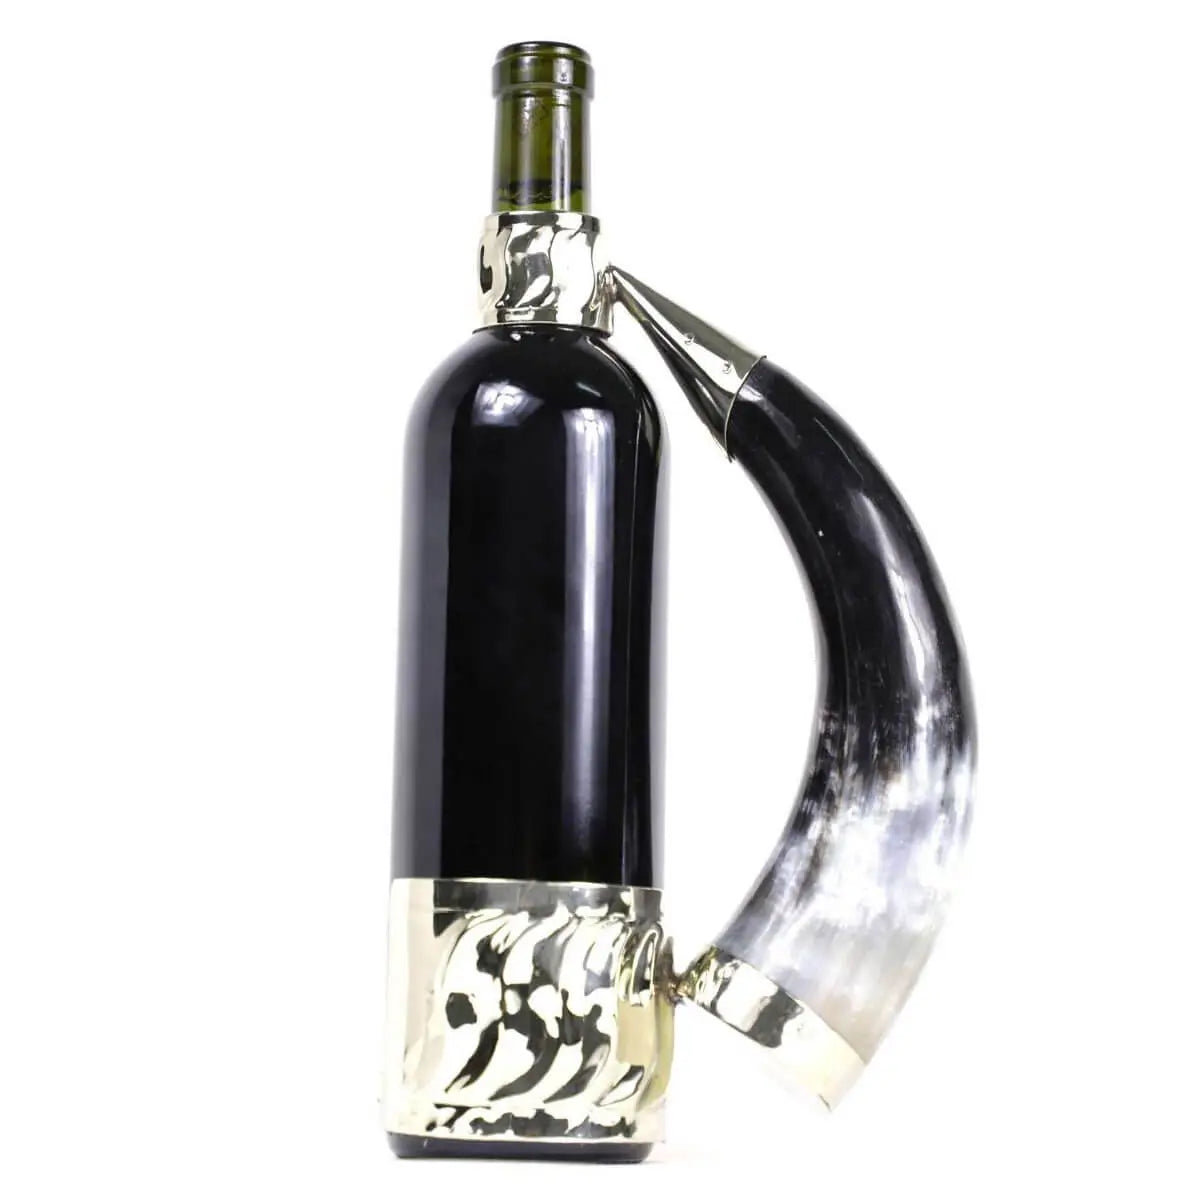 Cow horn curly finish wine bottle holder